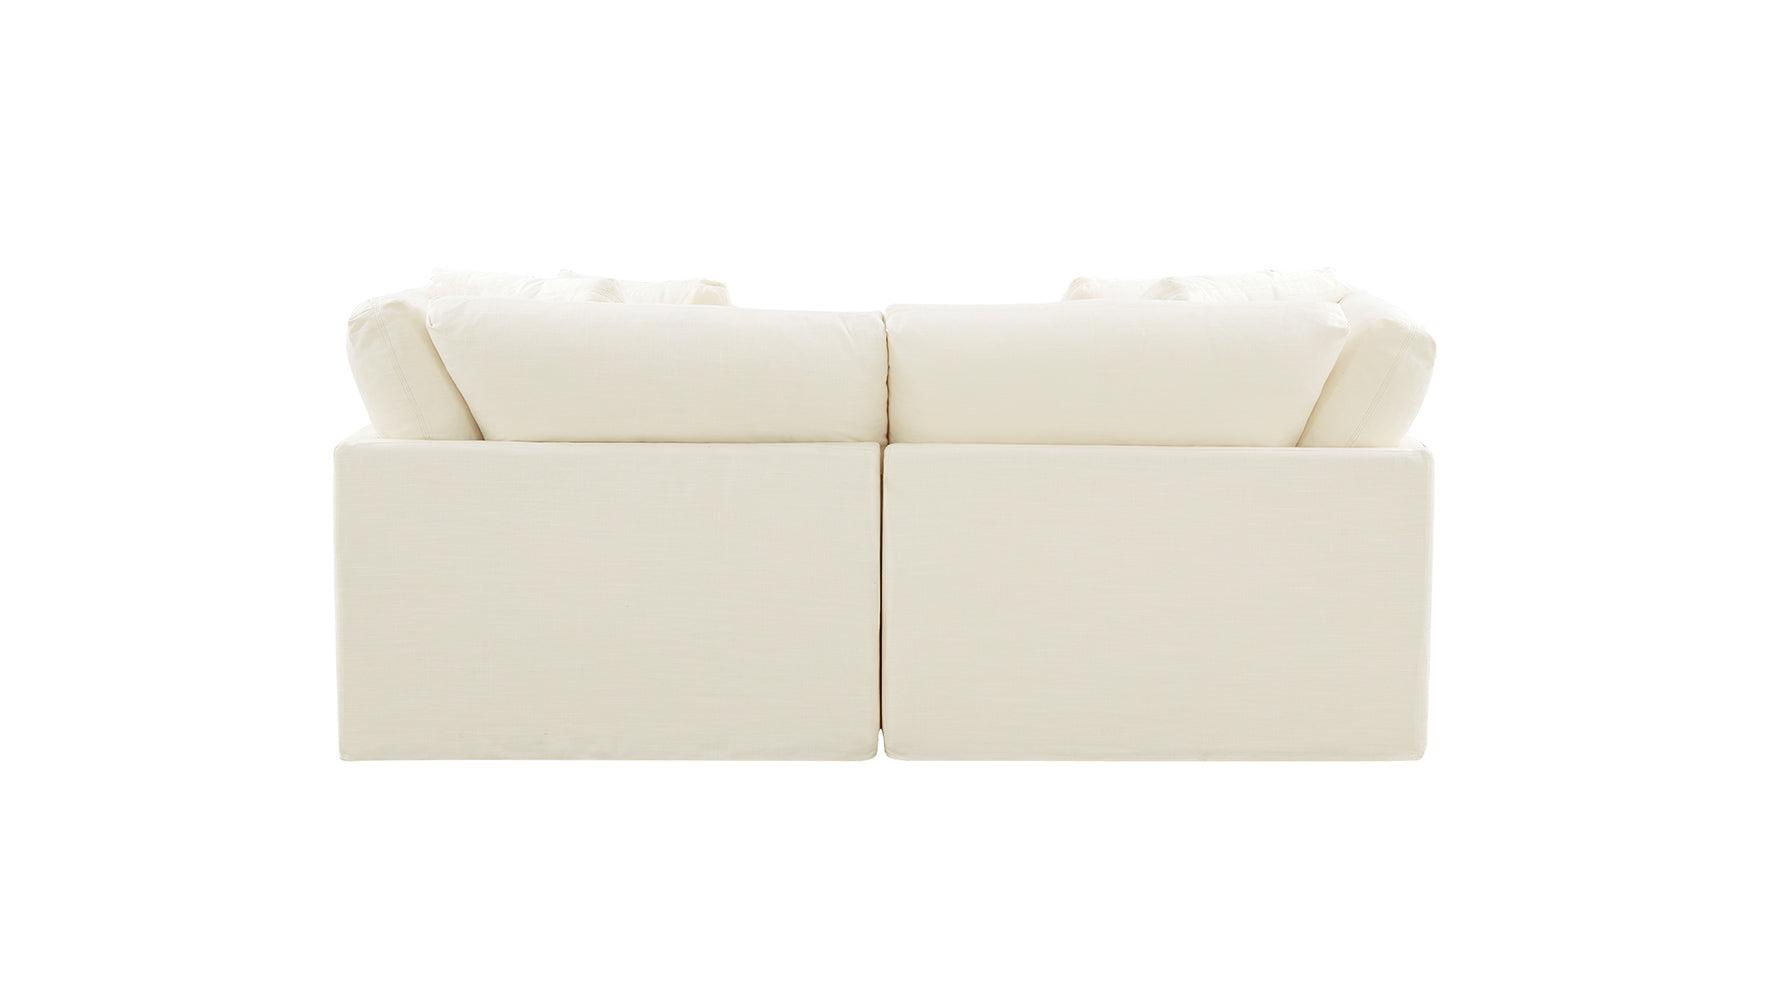 Get Together™ 2-Piece Modular Sofa, Large, Cream Linen - Image 8